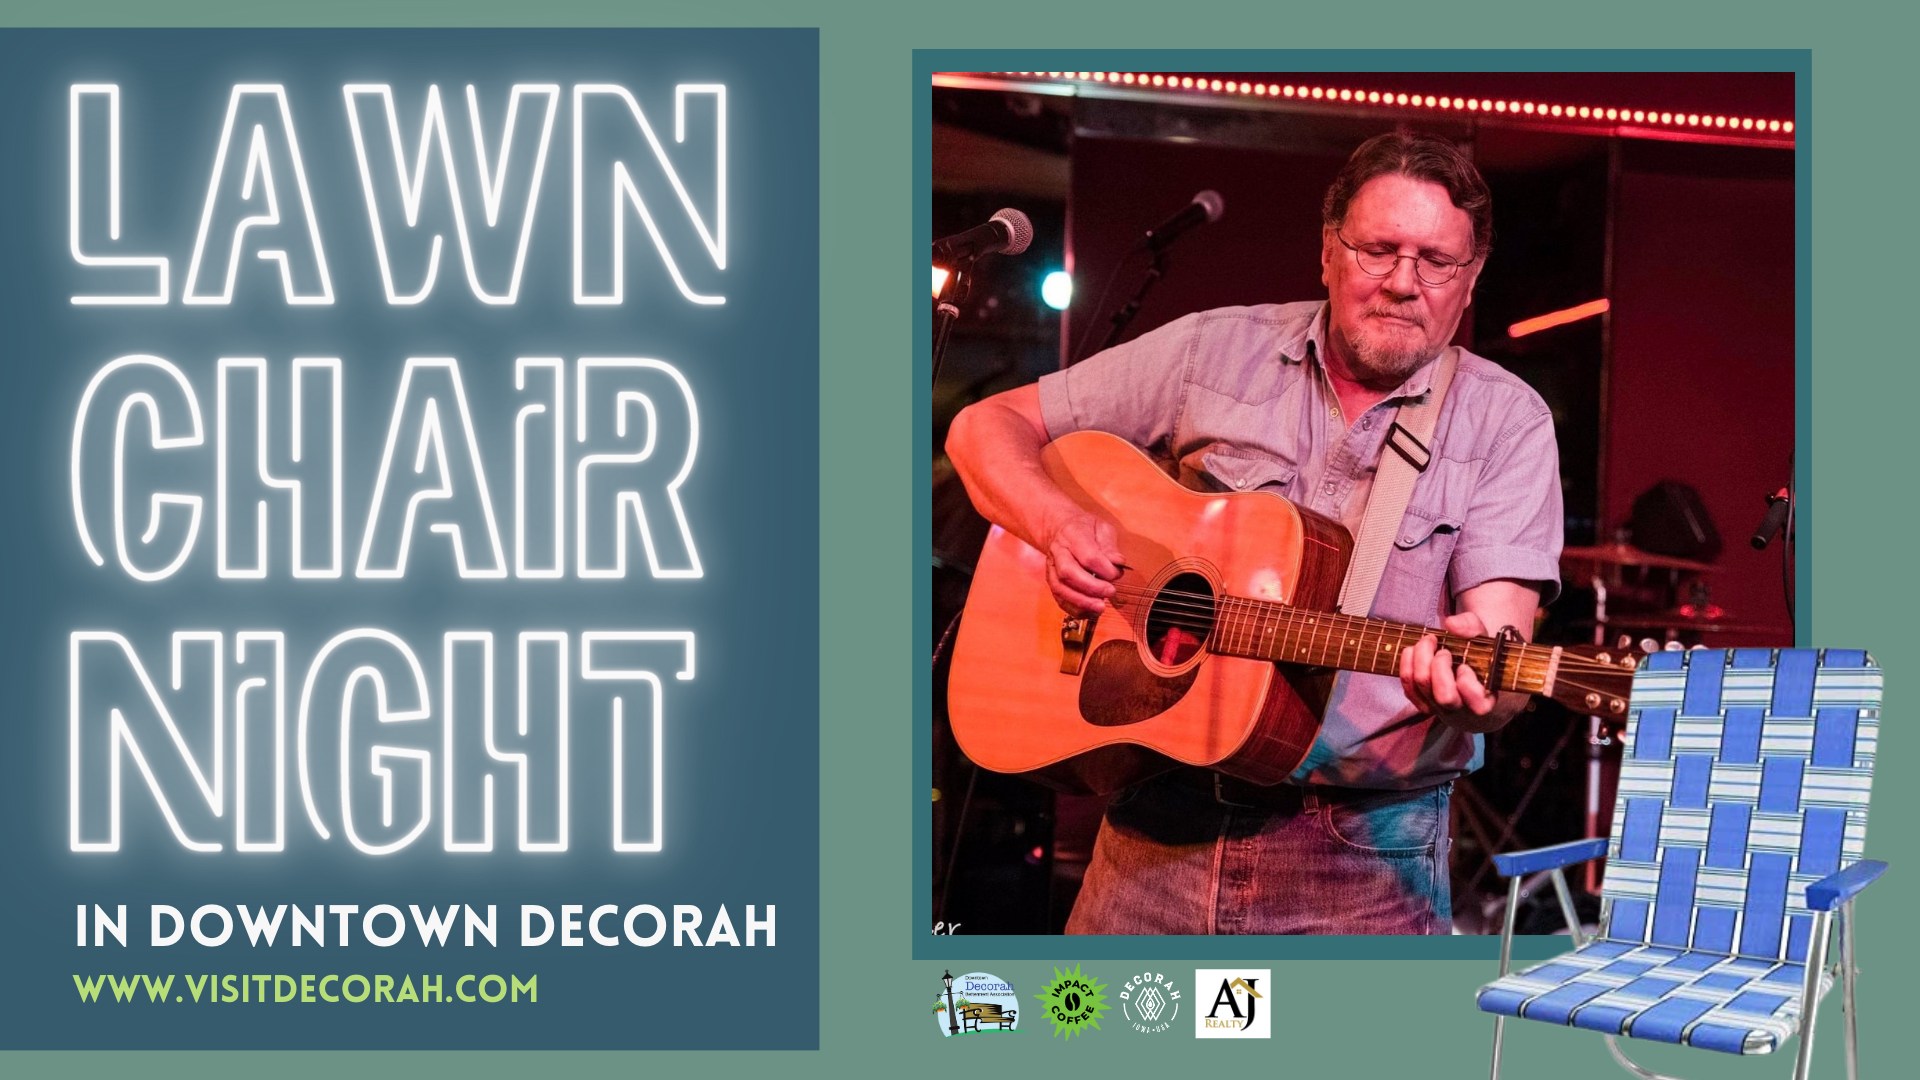 Lawn Chair Night in Downtown Decorah: Michael McElrath thumbnail